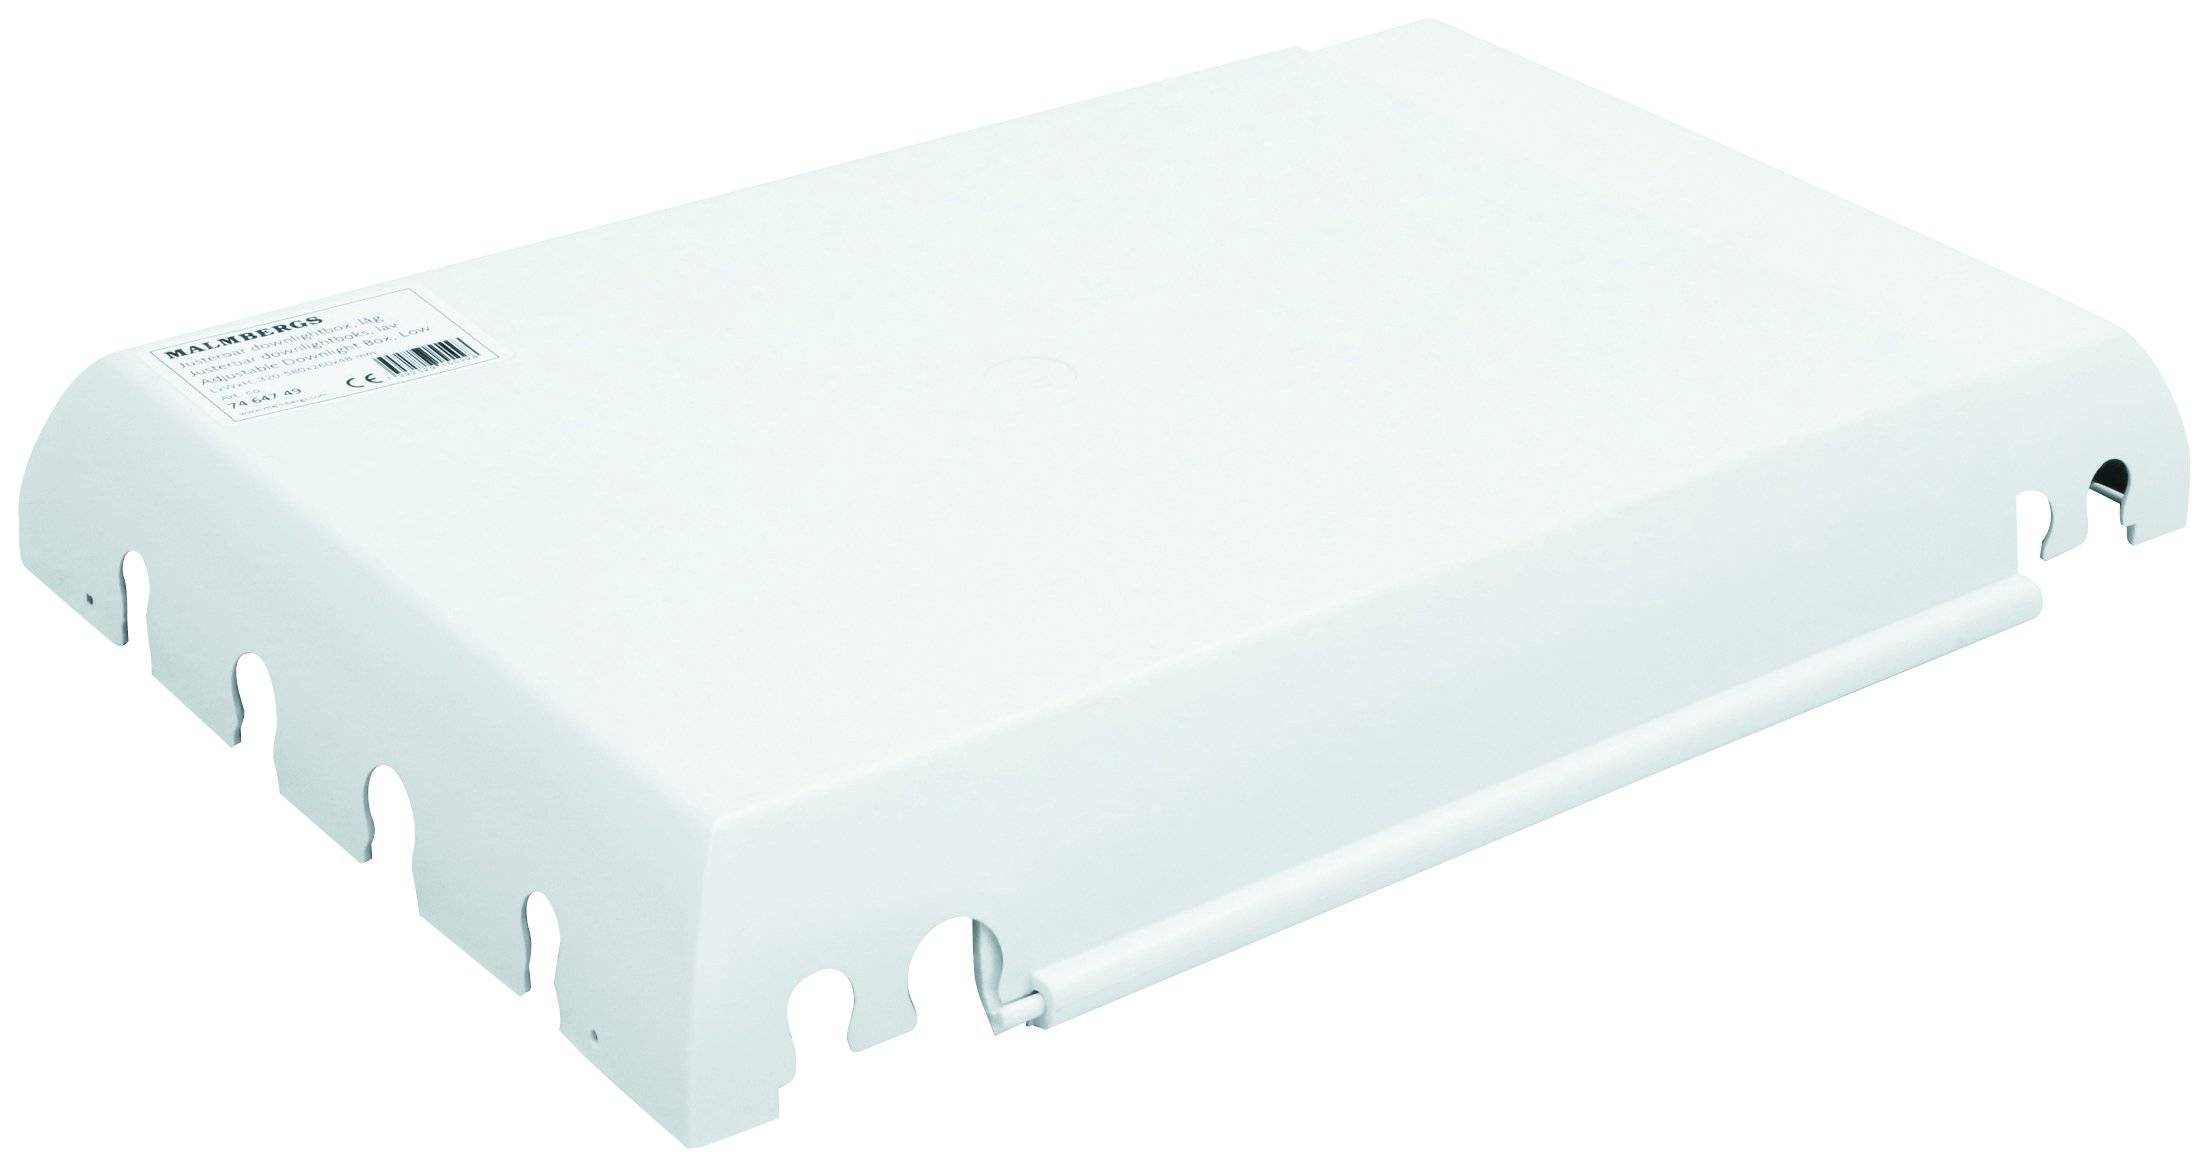 Downlightbox LED, 320-580x260x48 mm